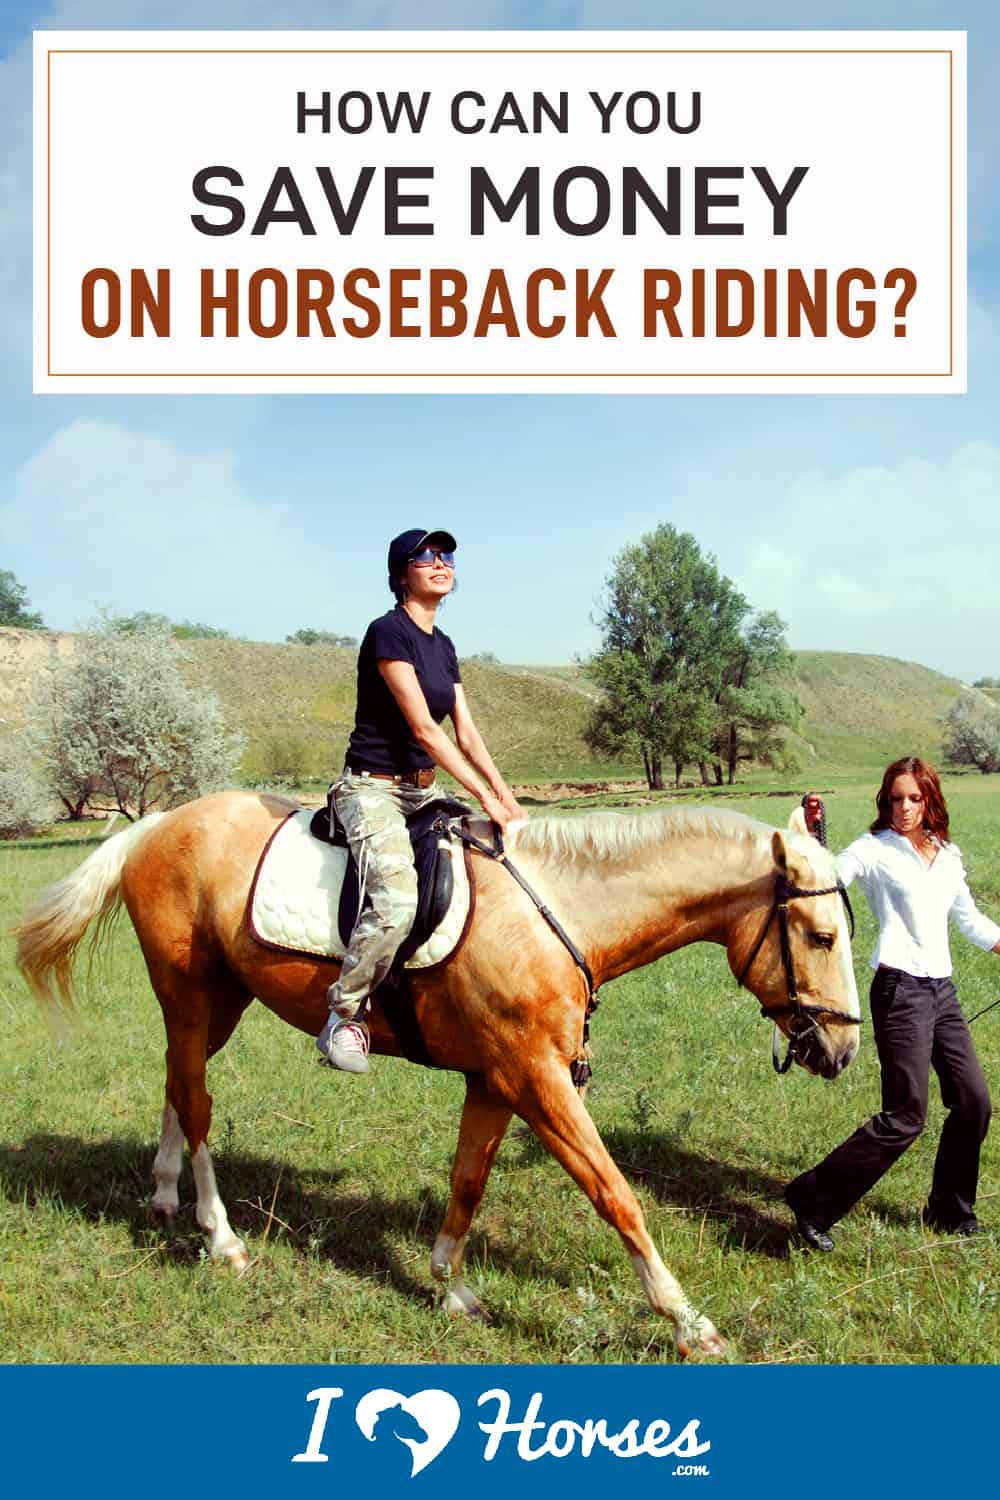 7 Ways To Make Horseback Riding More Affordable